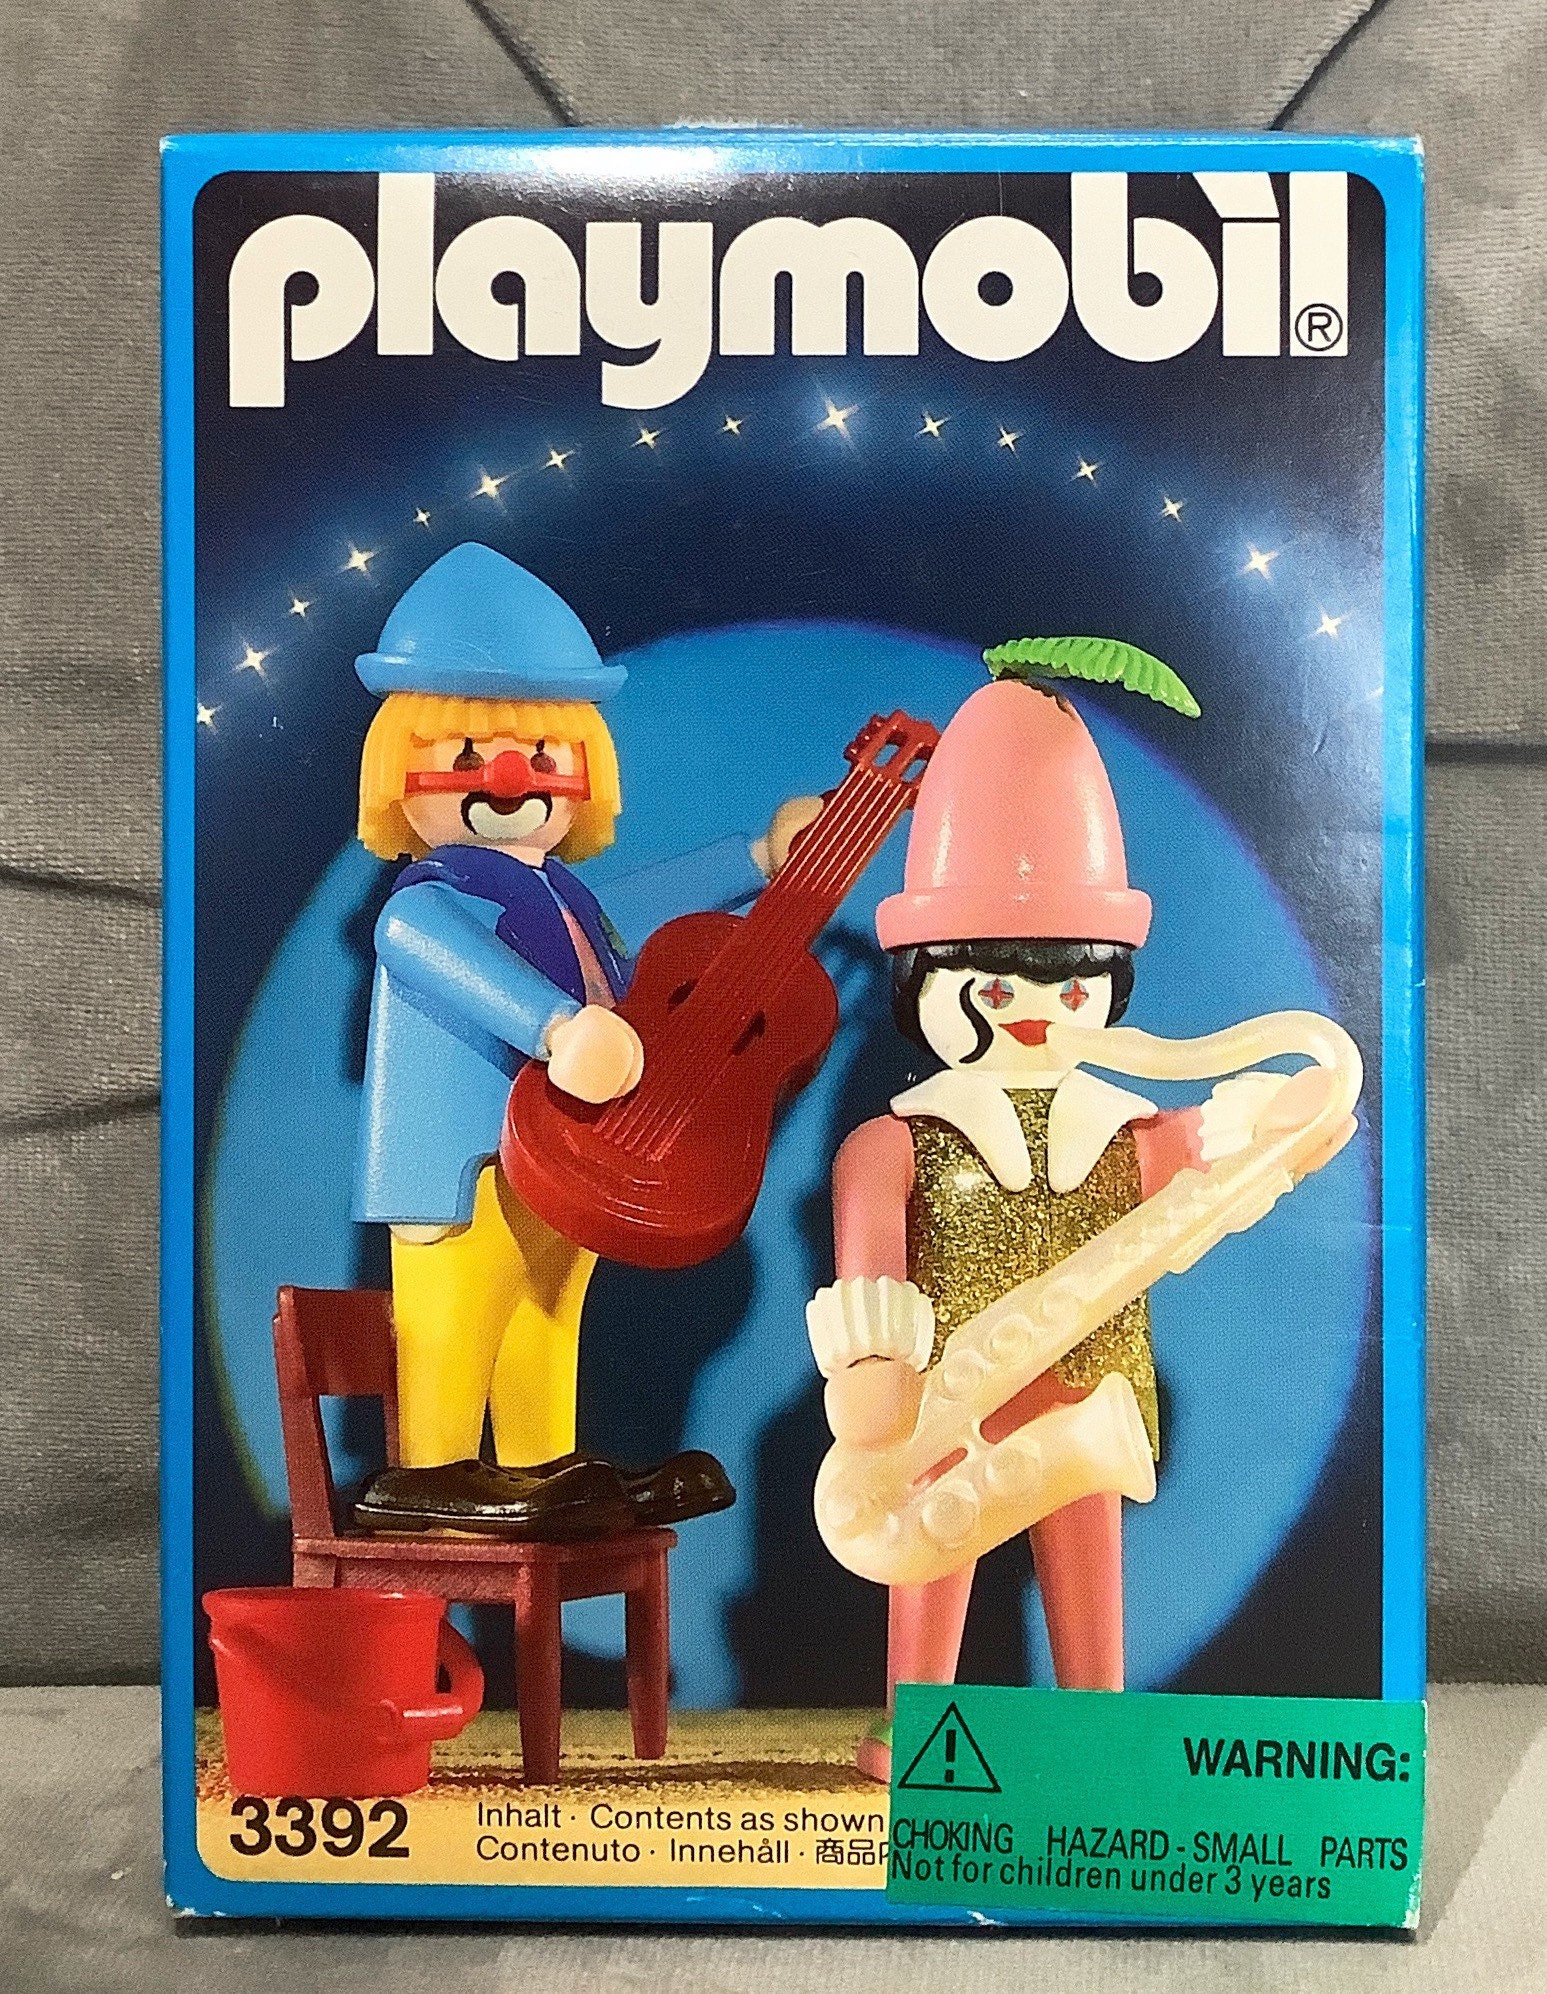 3 CLOWN Playmobil CIRCUS Figure, Playmobil Vintage Figurines